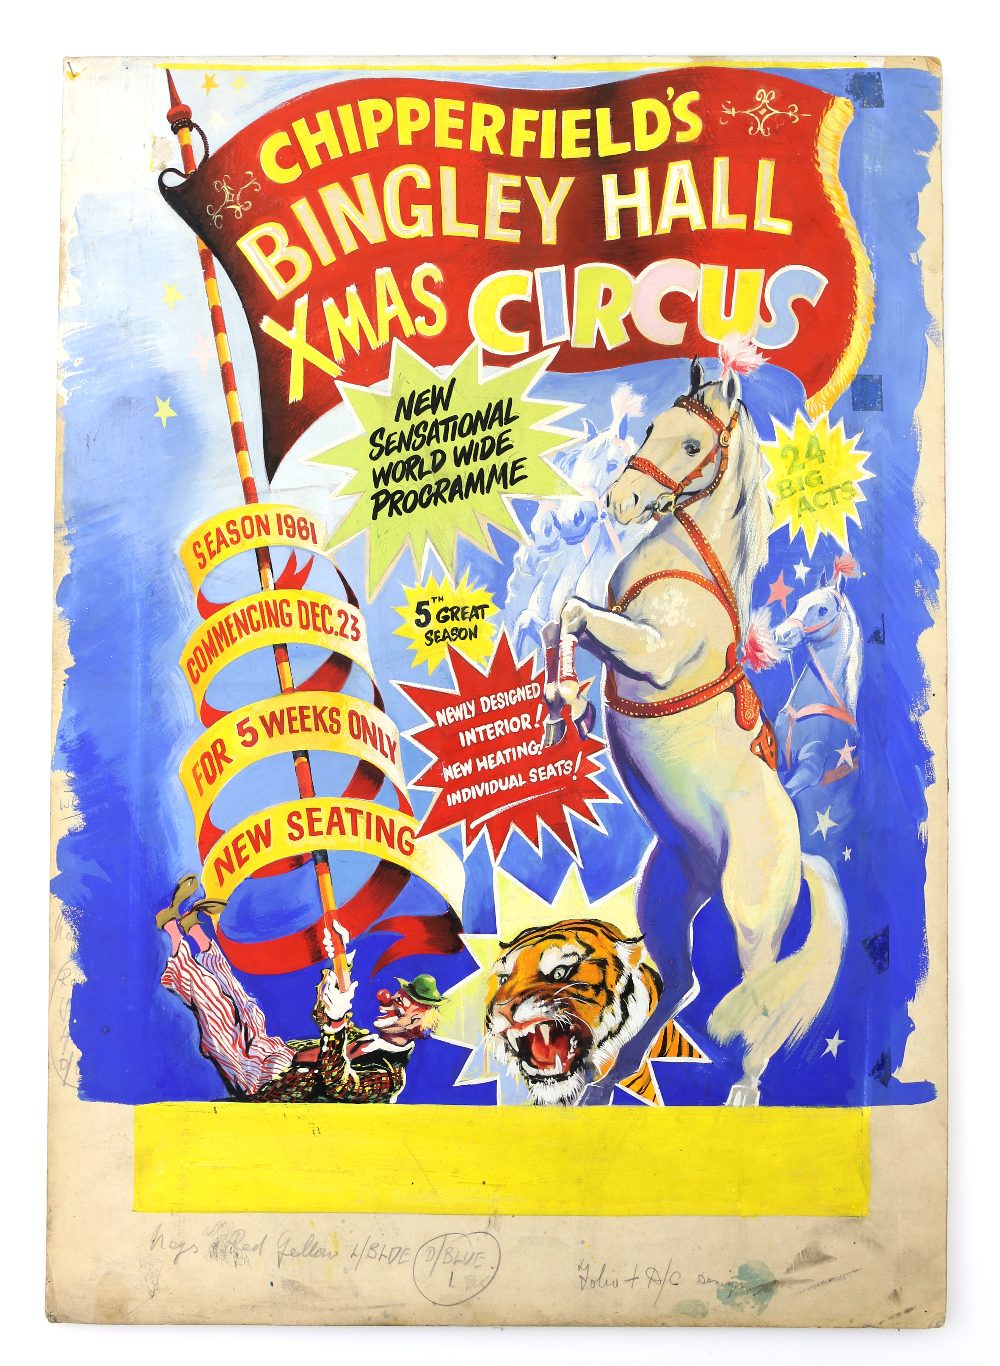 Chipperfield's Bingley Hall (Birmingham) Xmas Circus, 1981, 5th great season, original hand